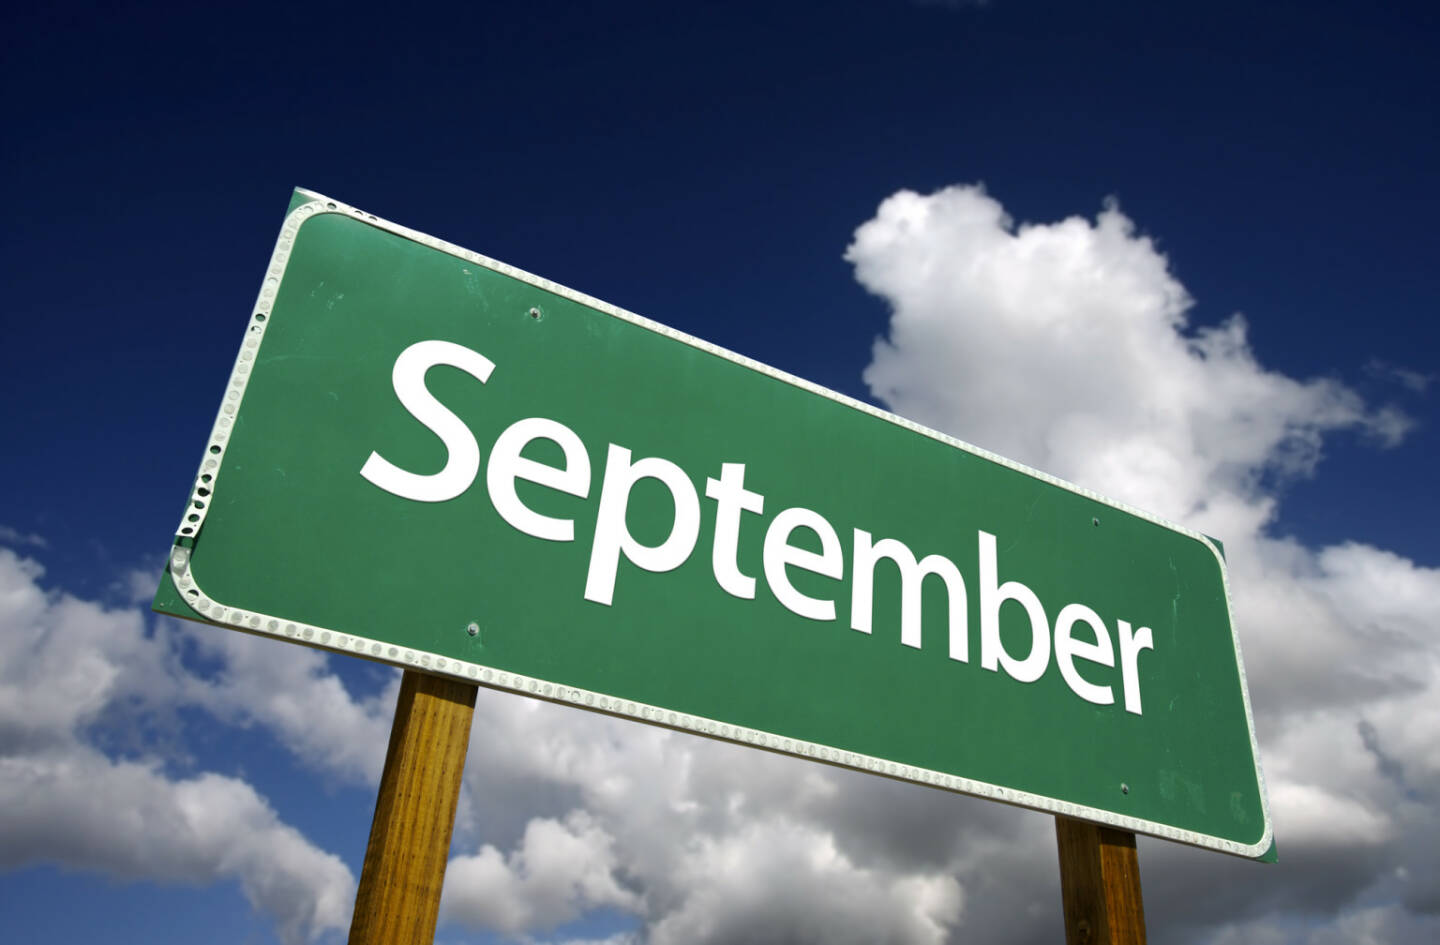 September - https://de.depositphotos.com/2328901/stock-photo-september-green-road-sign.html